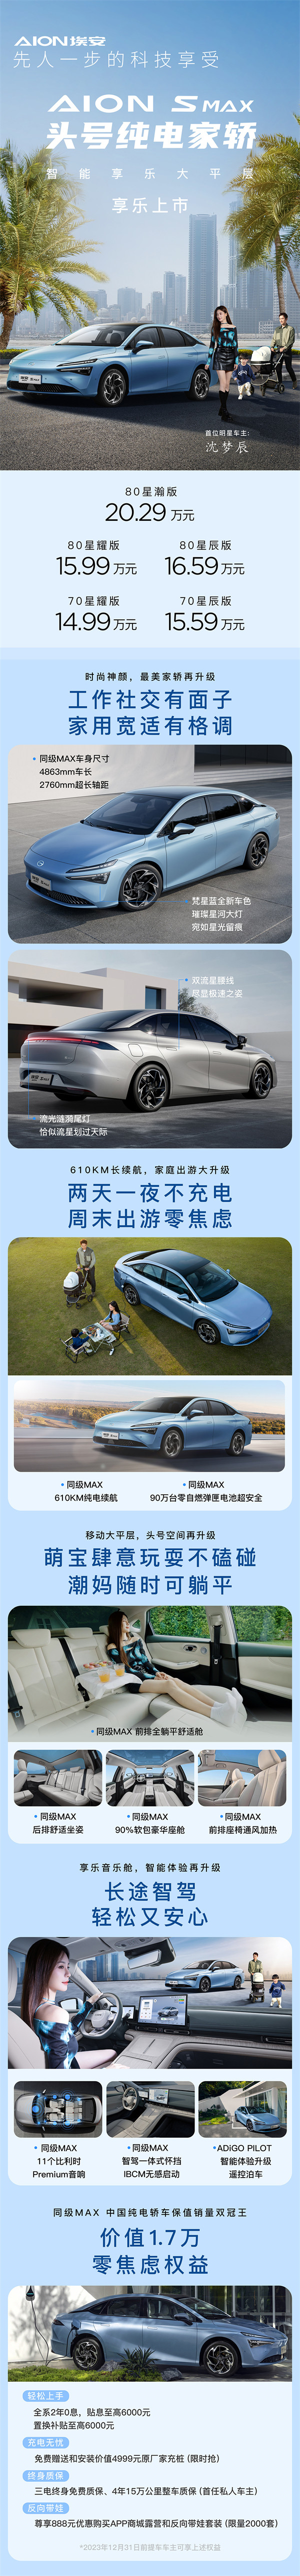 广汽埃安 AION S Max 上市，售价 14.99 万元起